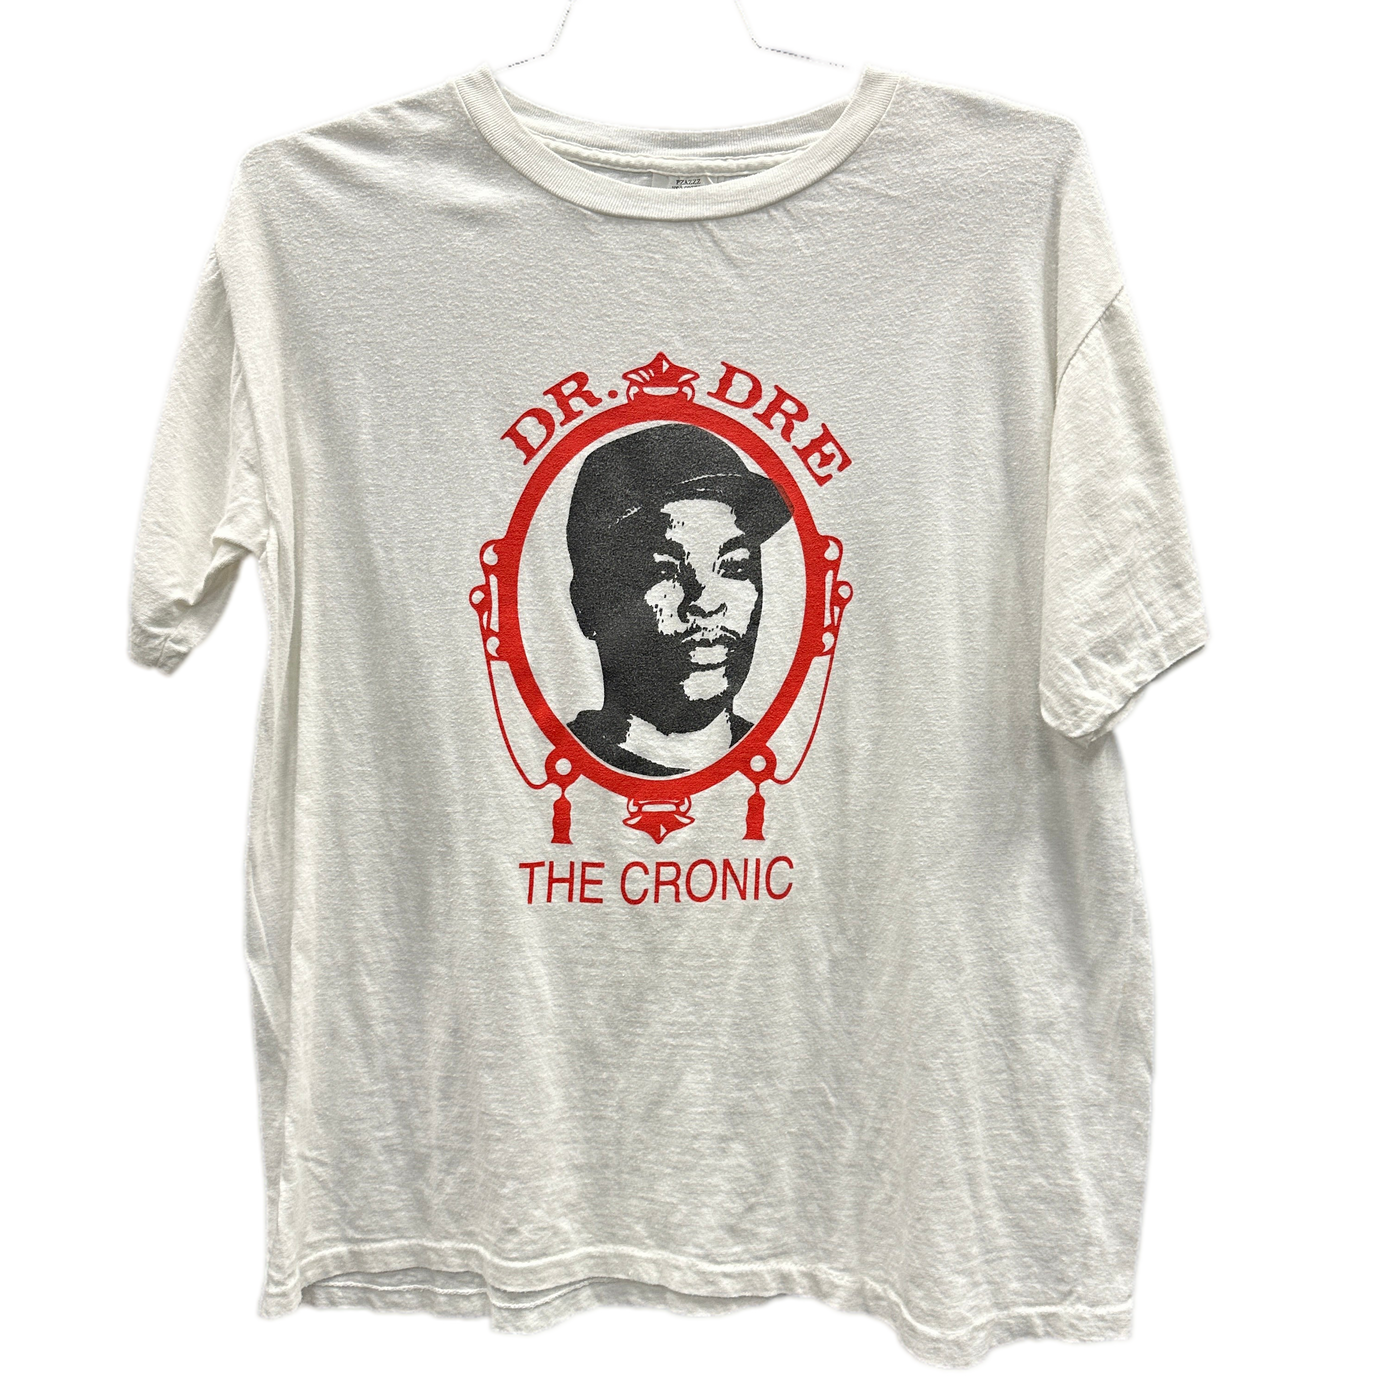 90's Dr. Dre "The Chronic" White Music T-shirt sz XL